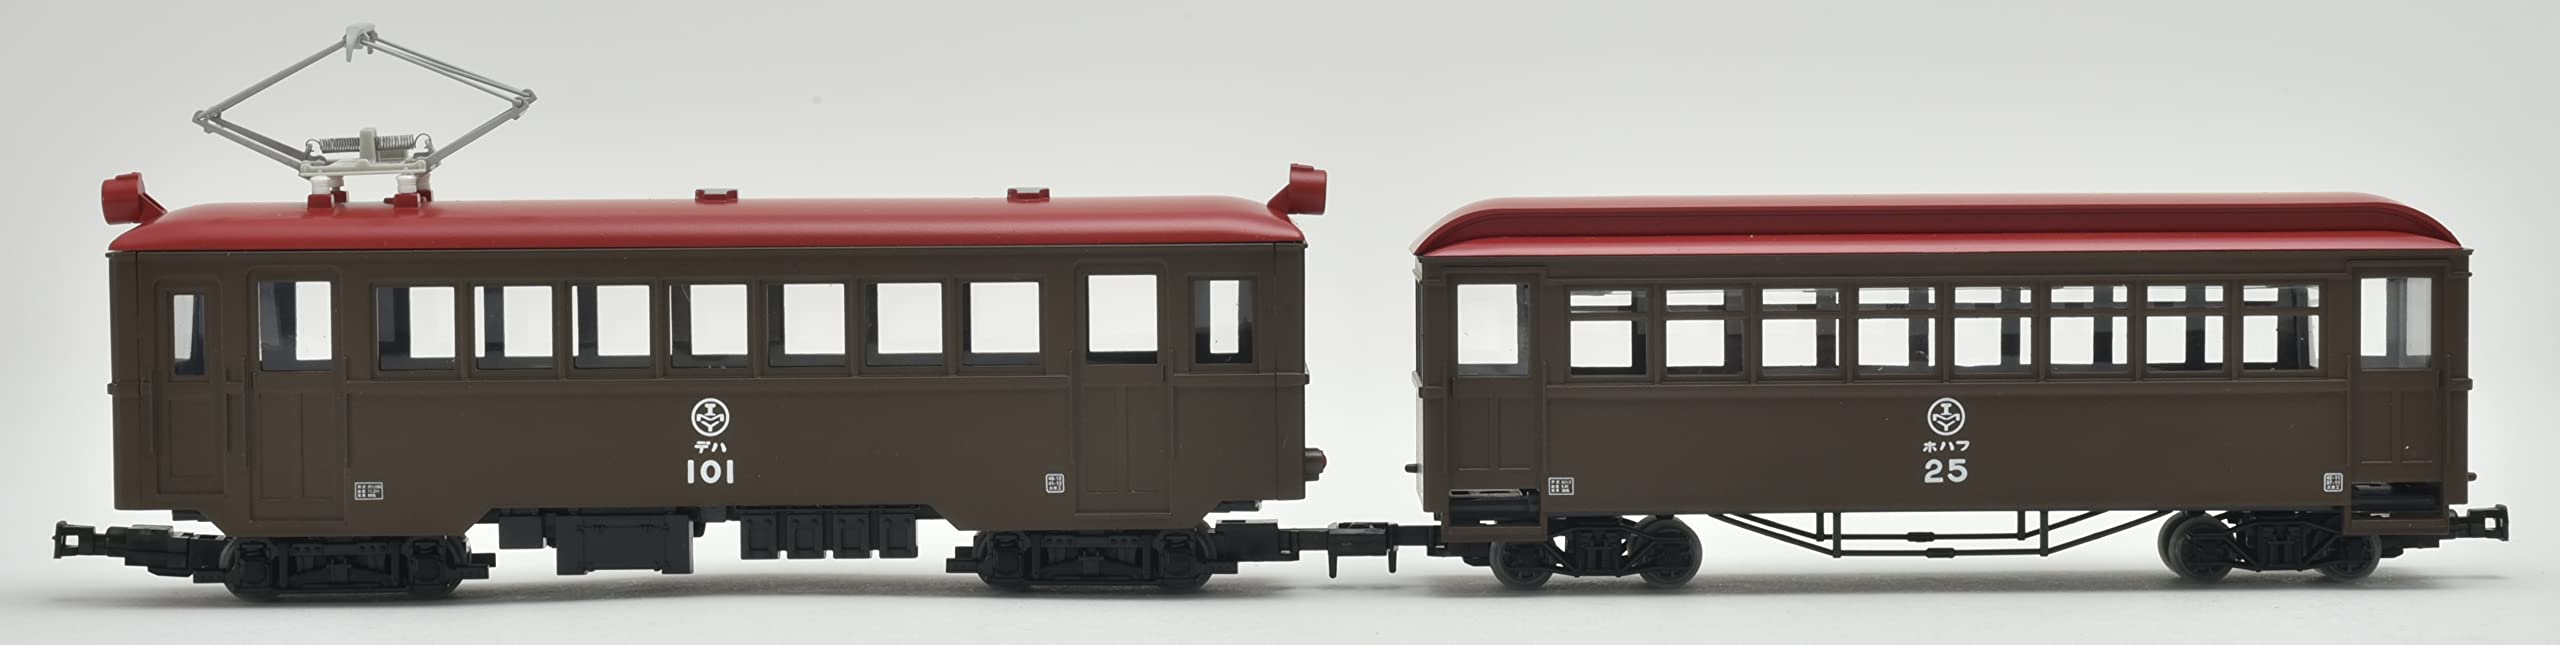 Tomytec Japan Railway Collection Iron Collection Voie étroite 80 Ligne Nekoya Yamaneko Deha 101 + Hohafu 25 2 Ensemble de voitures Diorama 315490